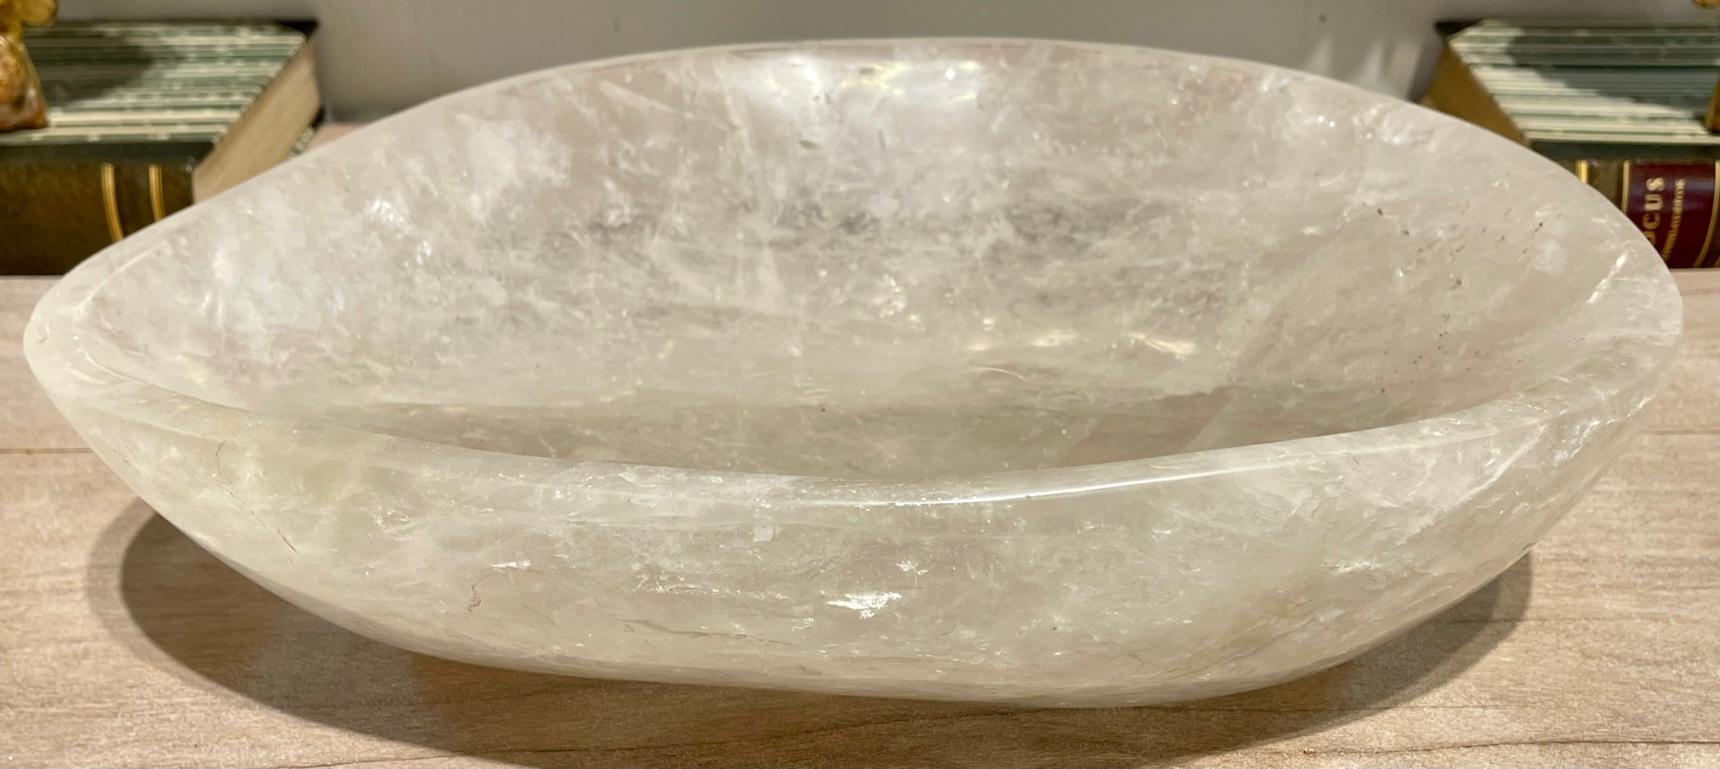 Modern Brazilian polished rock crystal bowl. Circa 2000. Sure to make a statement!